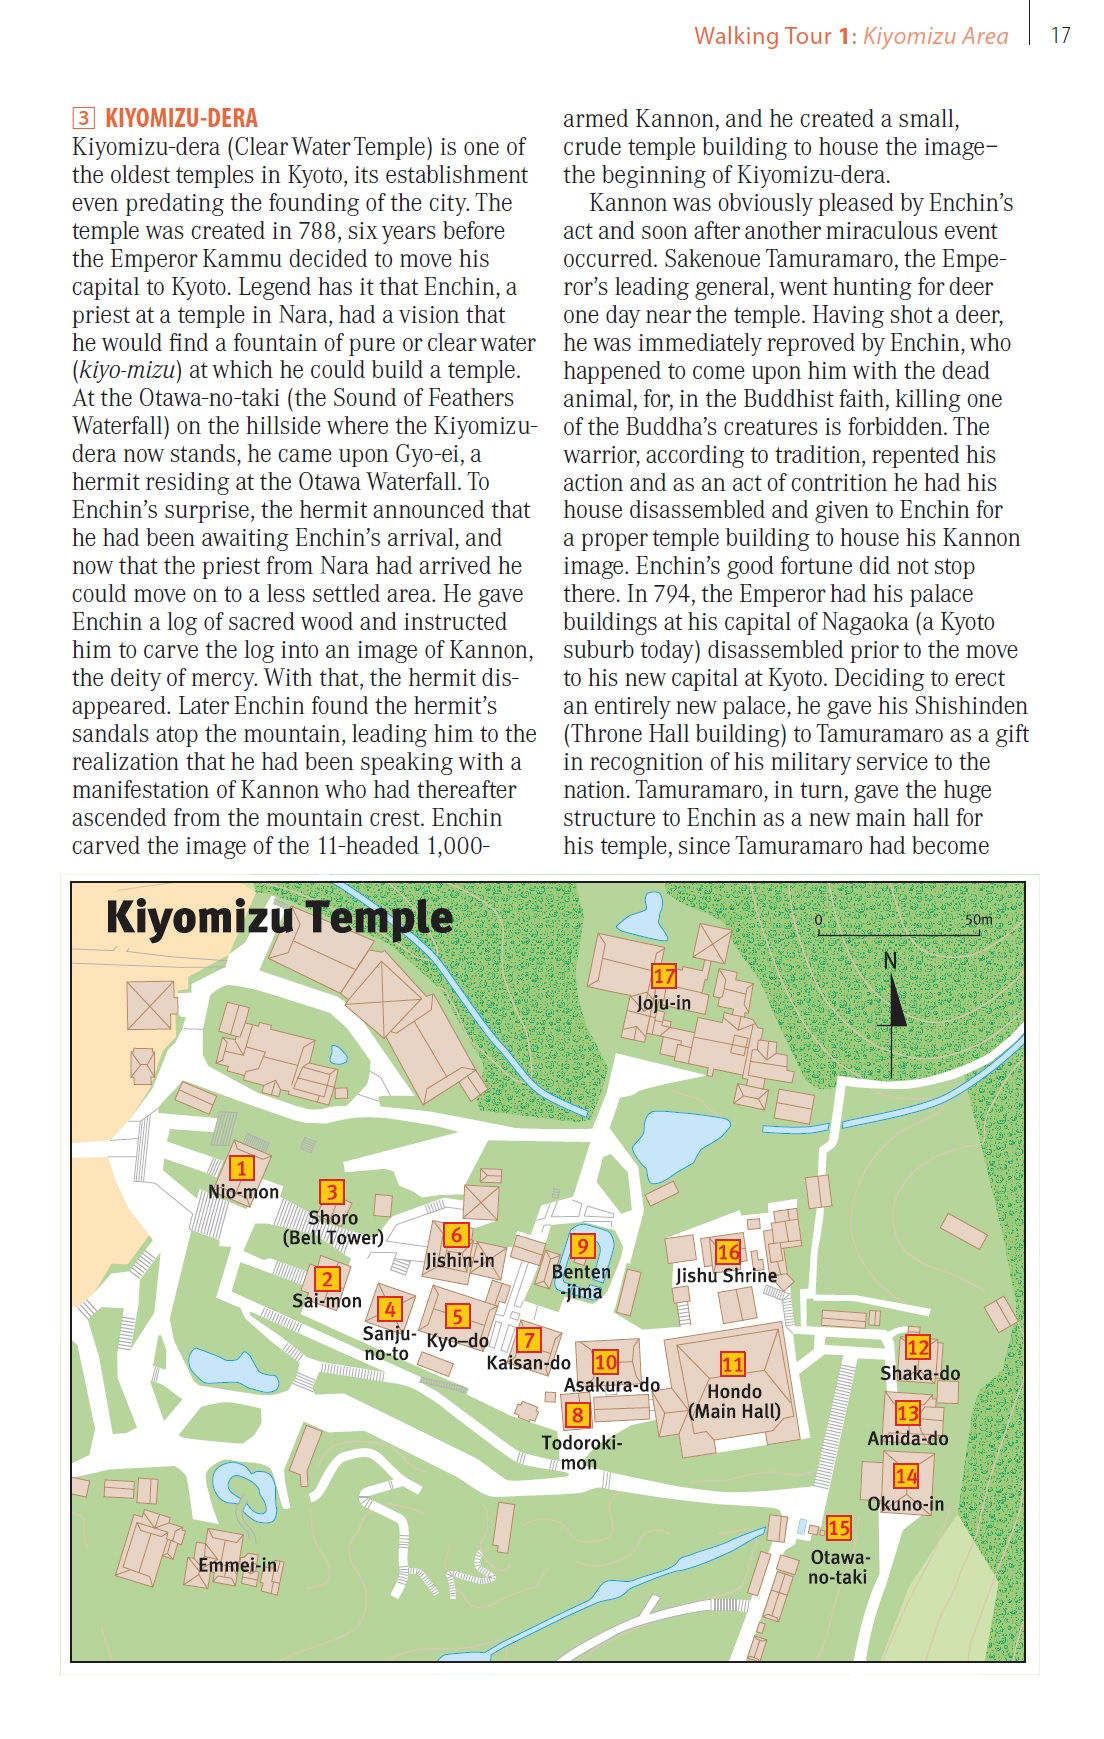 Kyoto, 29 Walks in Japan's Ancient Capital